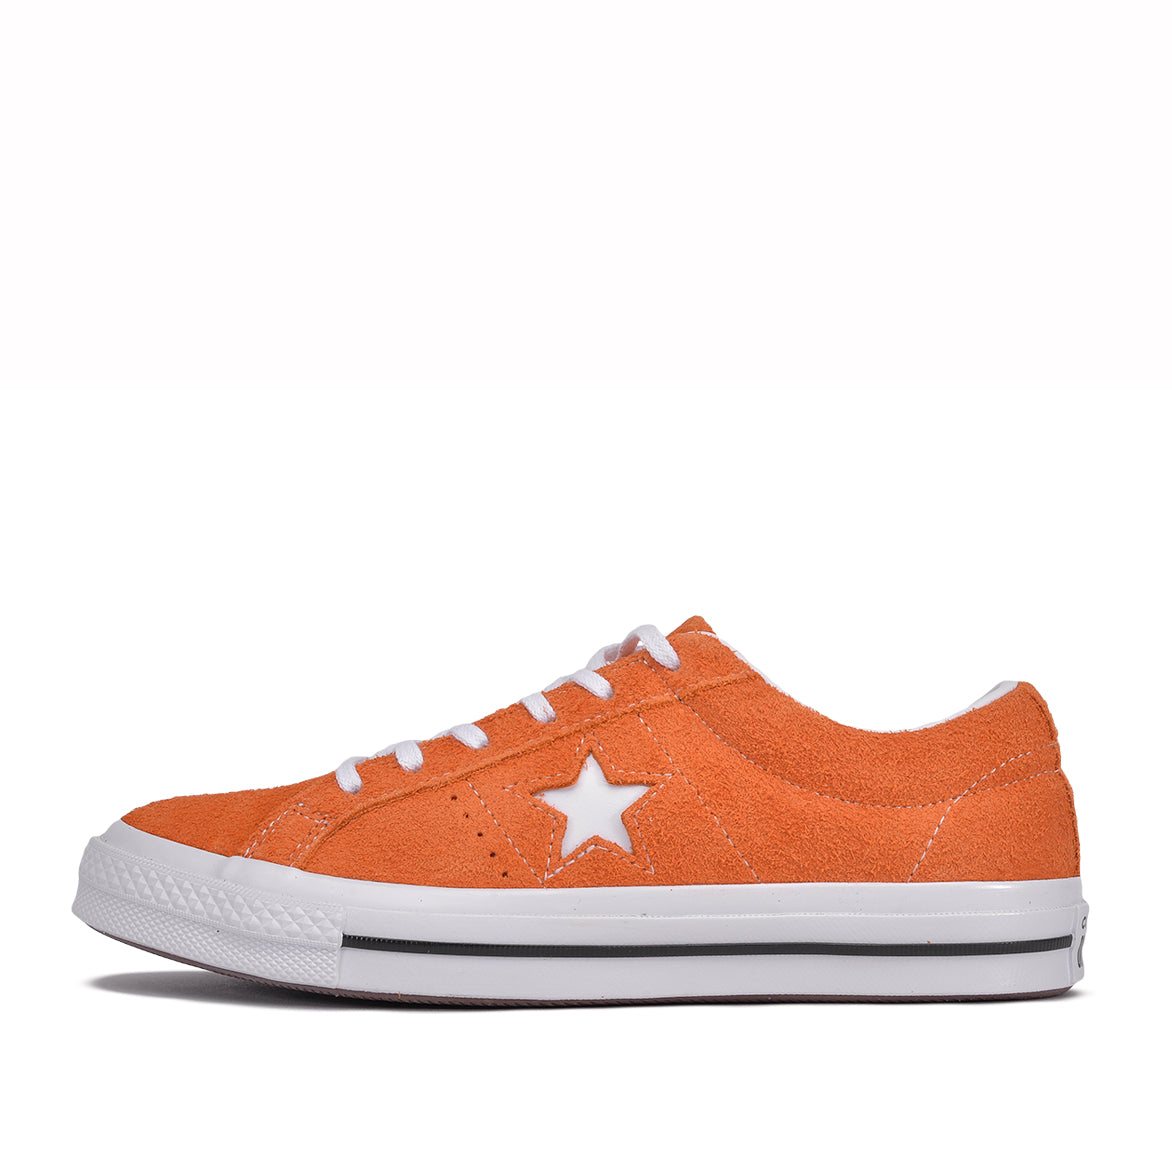 converse one star ox bold mandarin